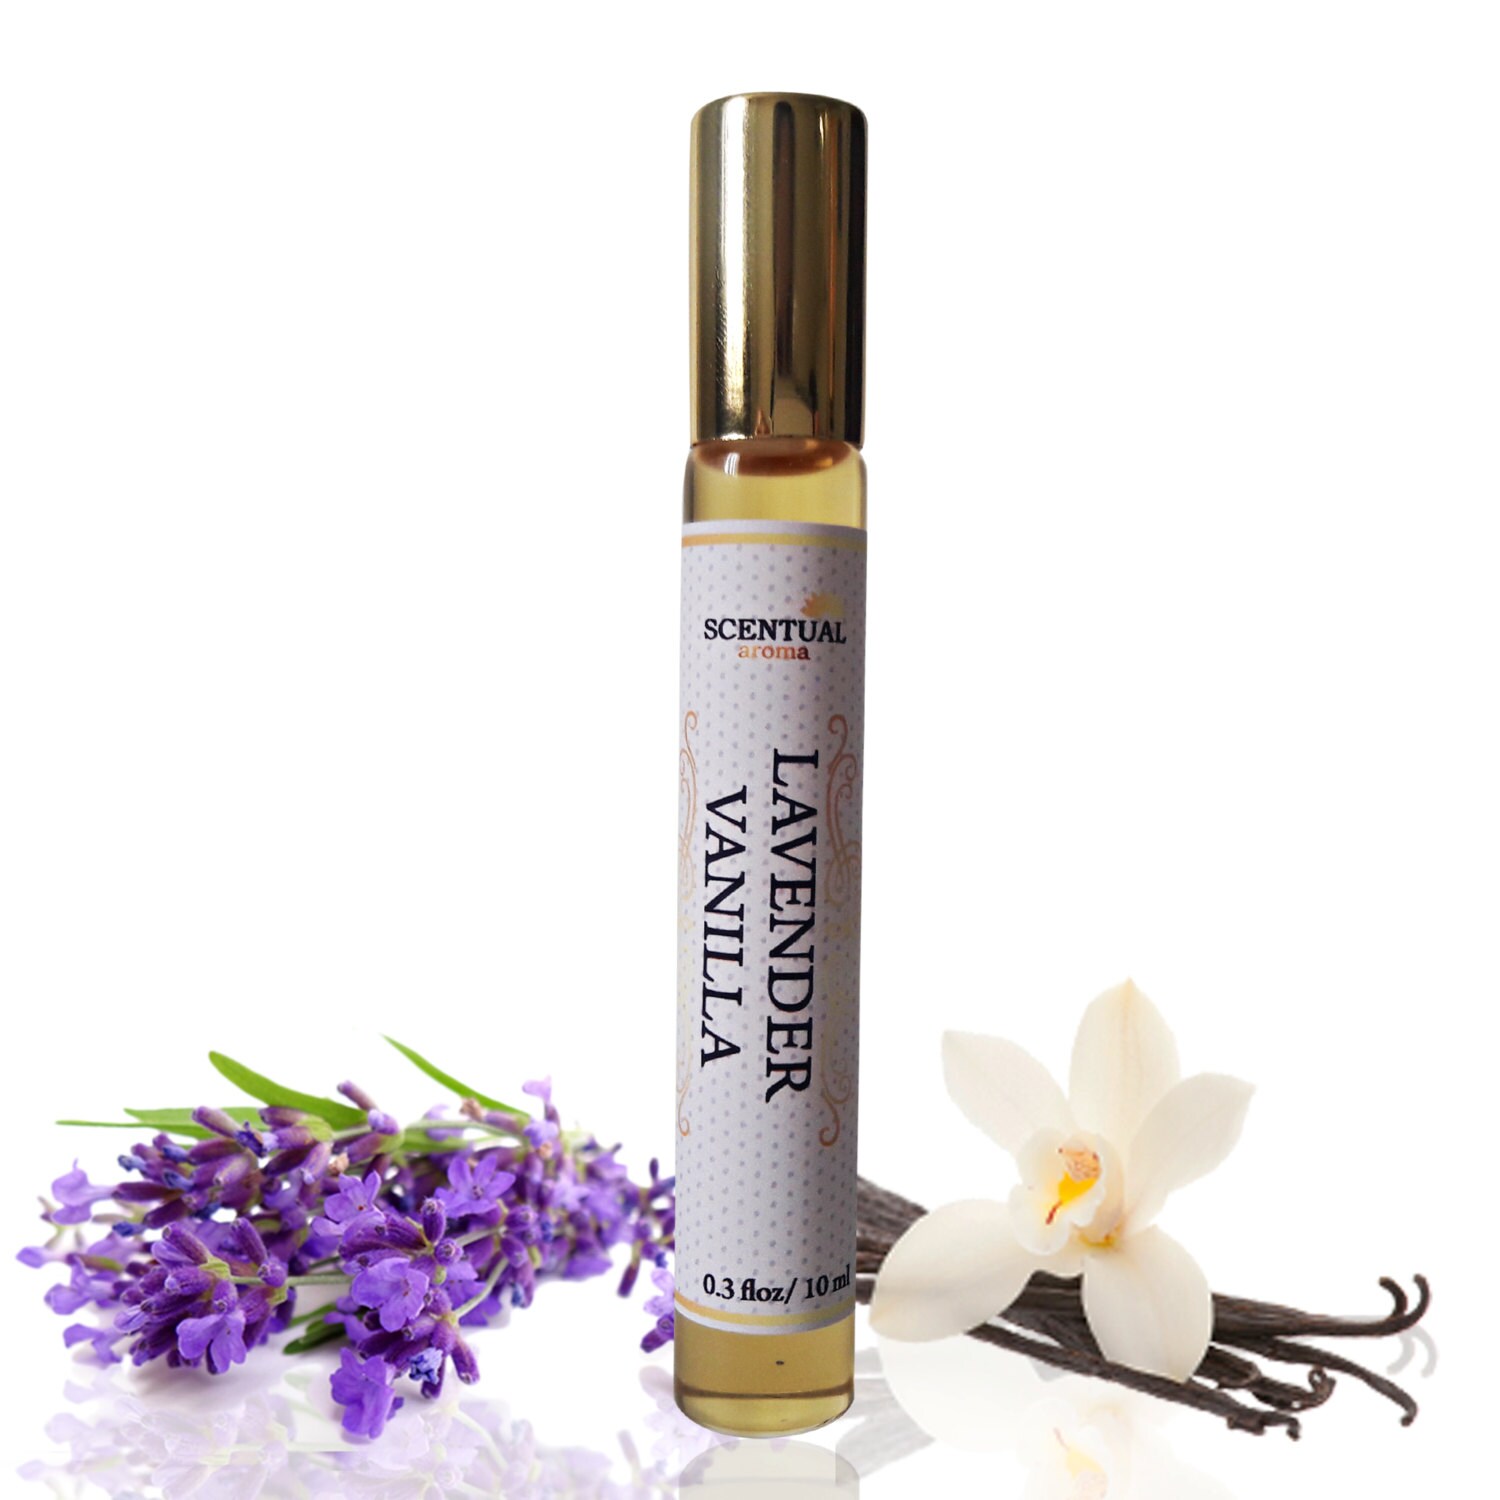 lavender and vanilla perfume